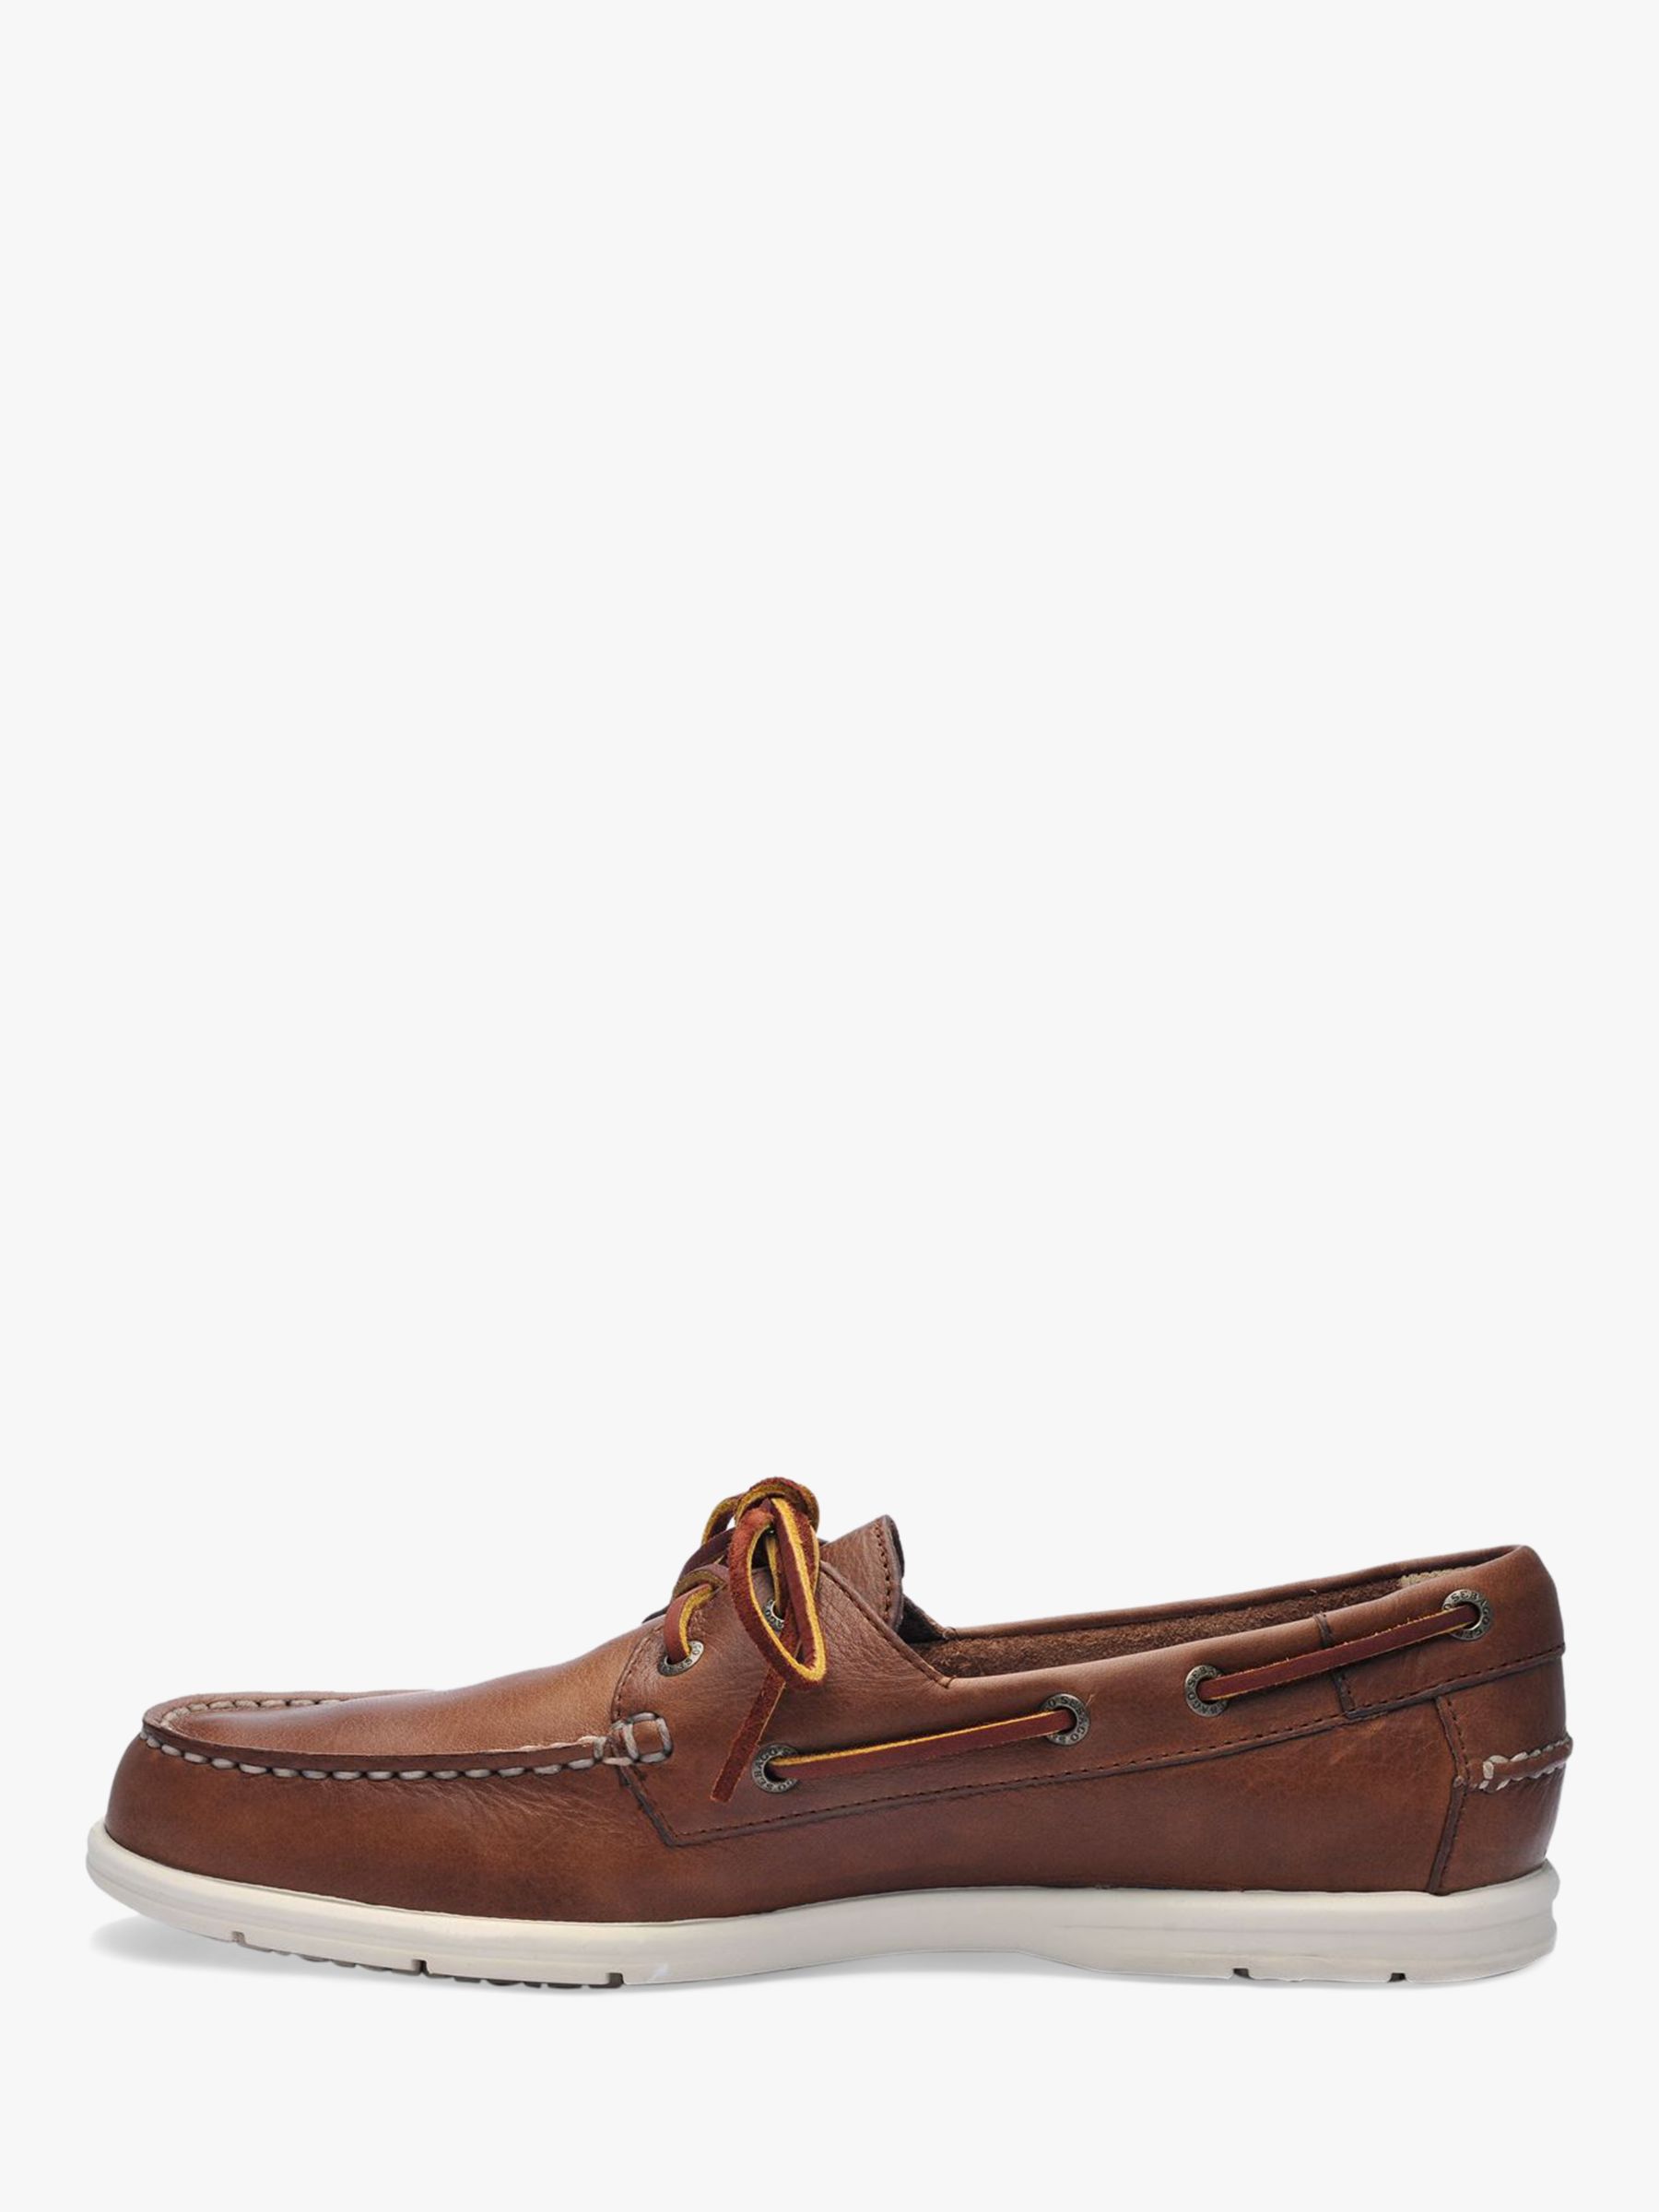 Sebago Naples Leather Boat Shoes, Dark Brown at John Lewis & Partners